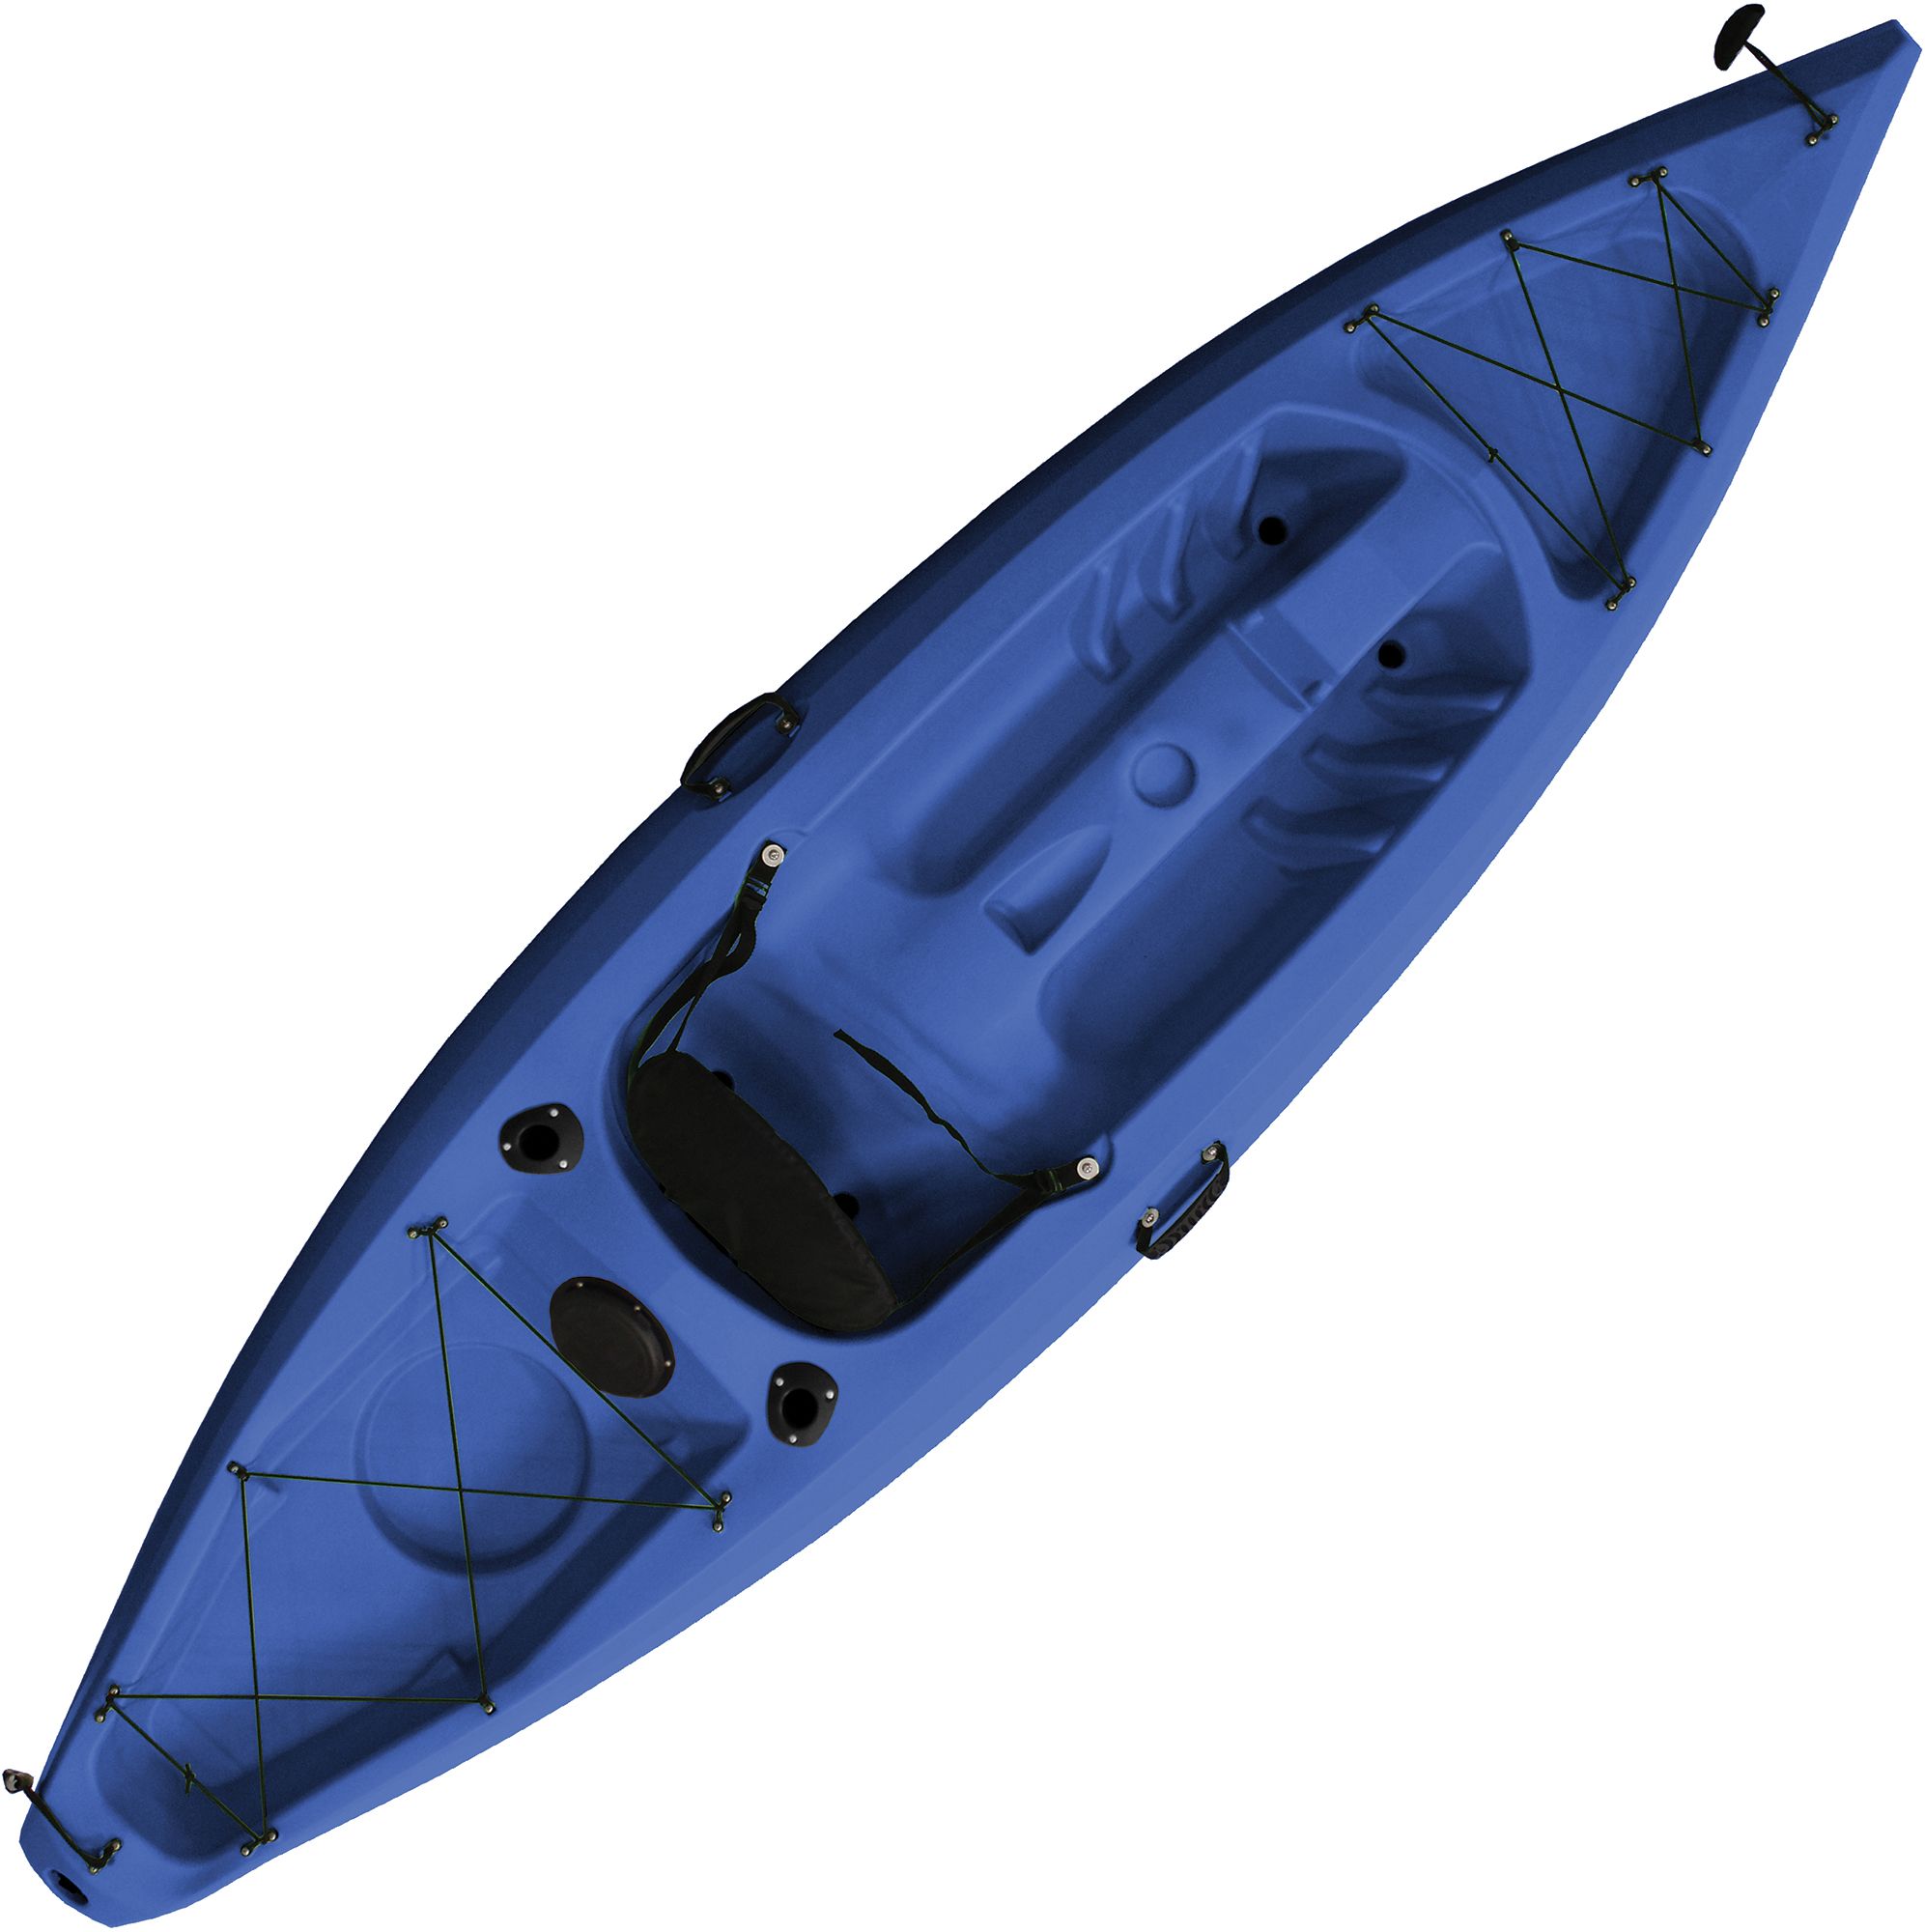 Kayaks - Buy a Kayak | DICK'S Sporting Goods